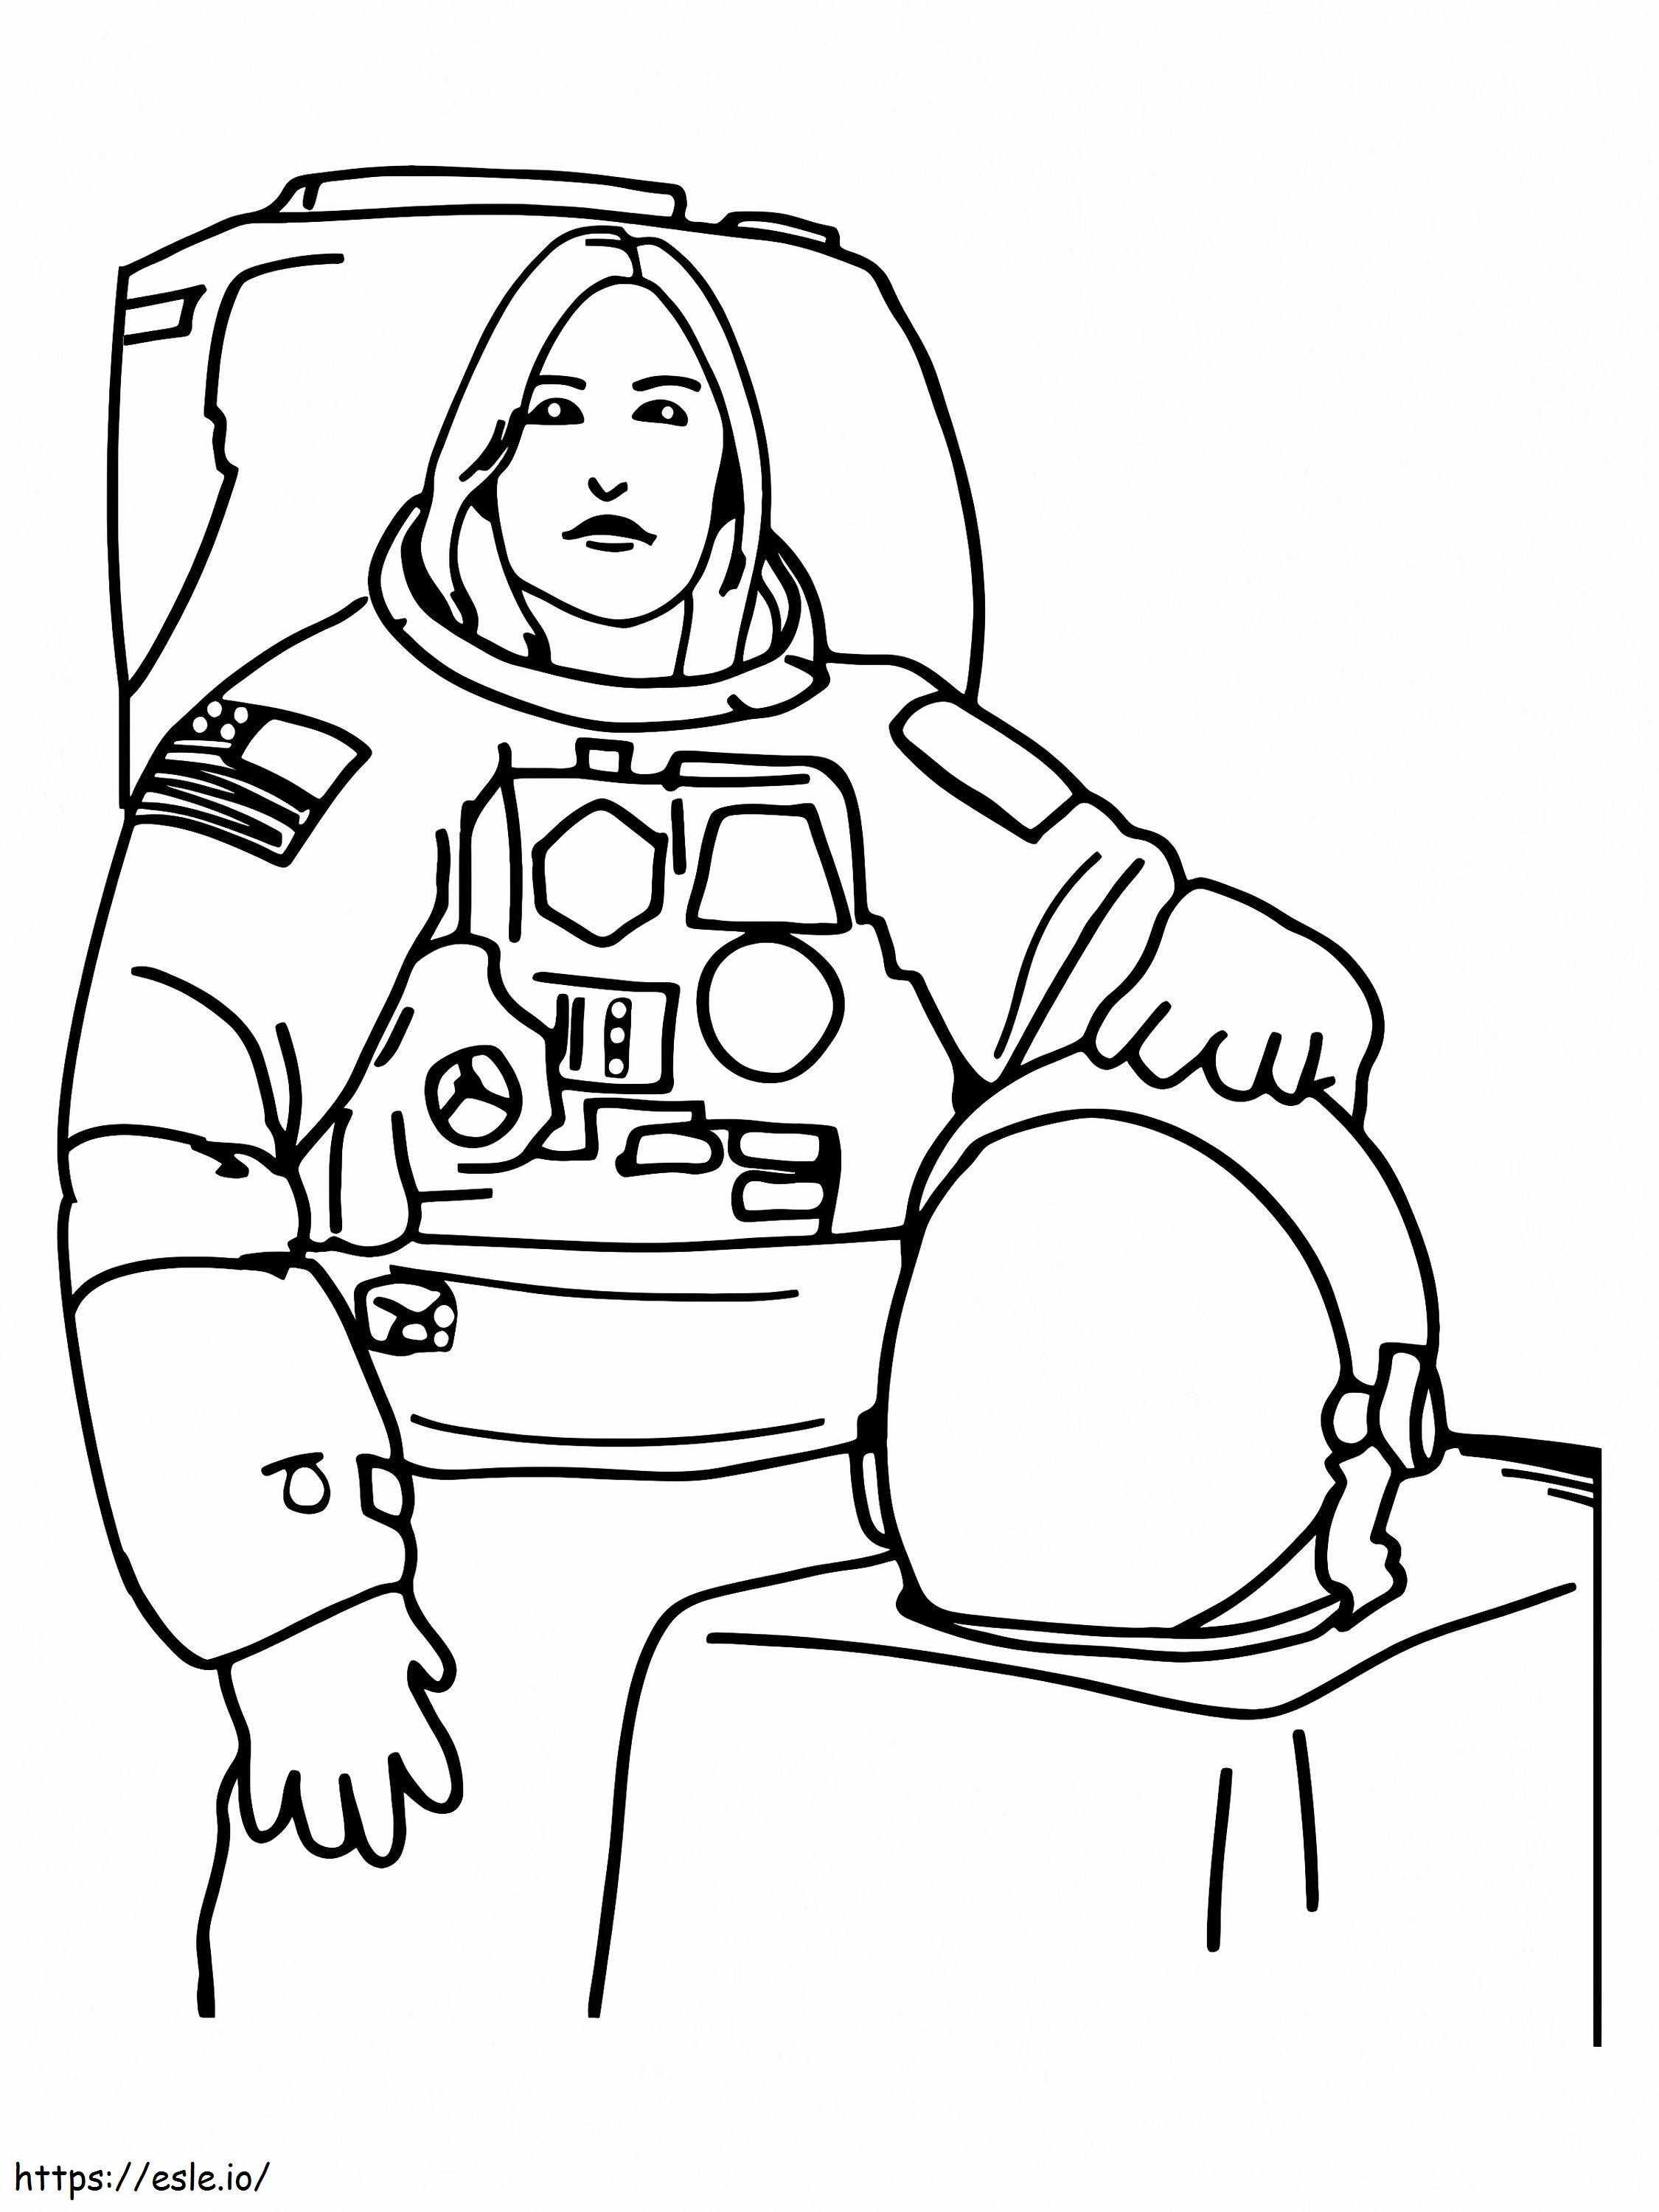 Kosmonautka NASA kolorowanka